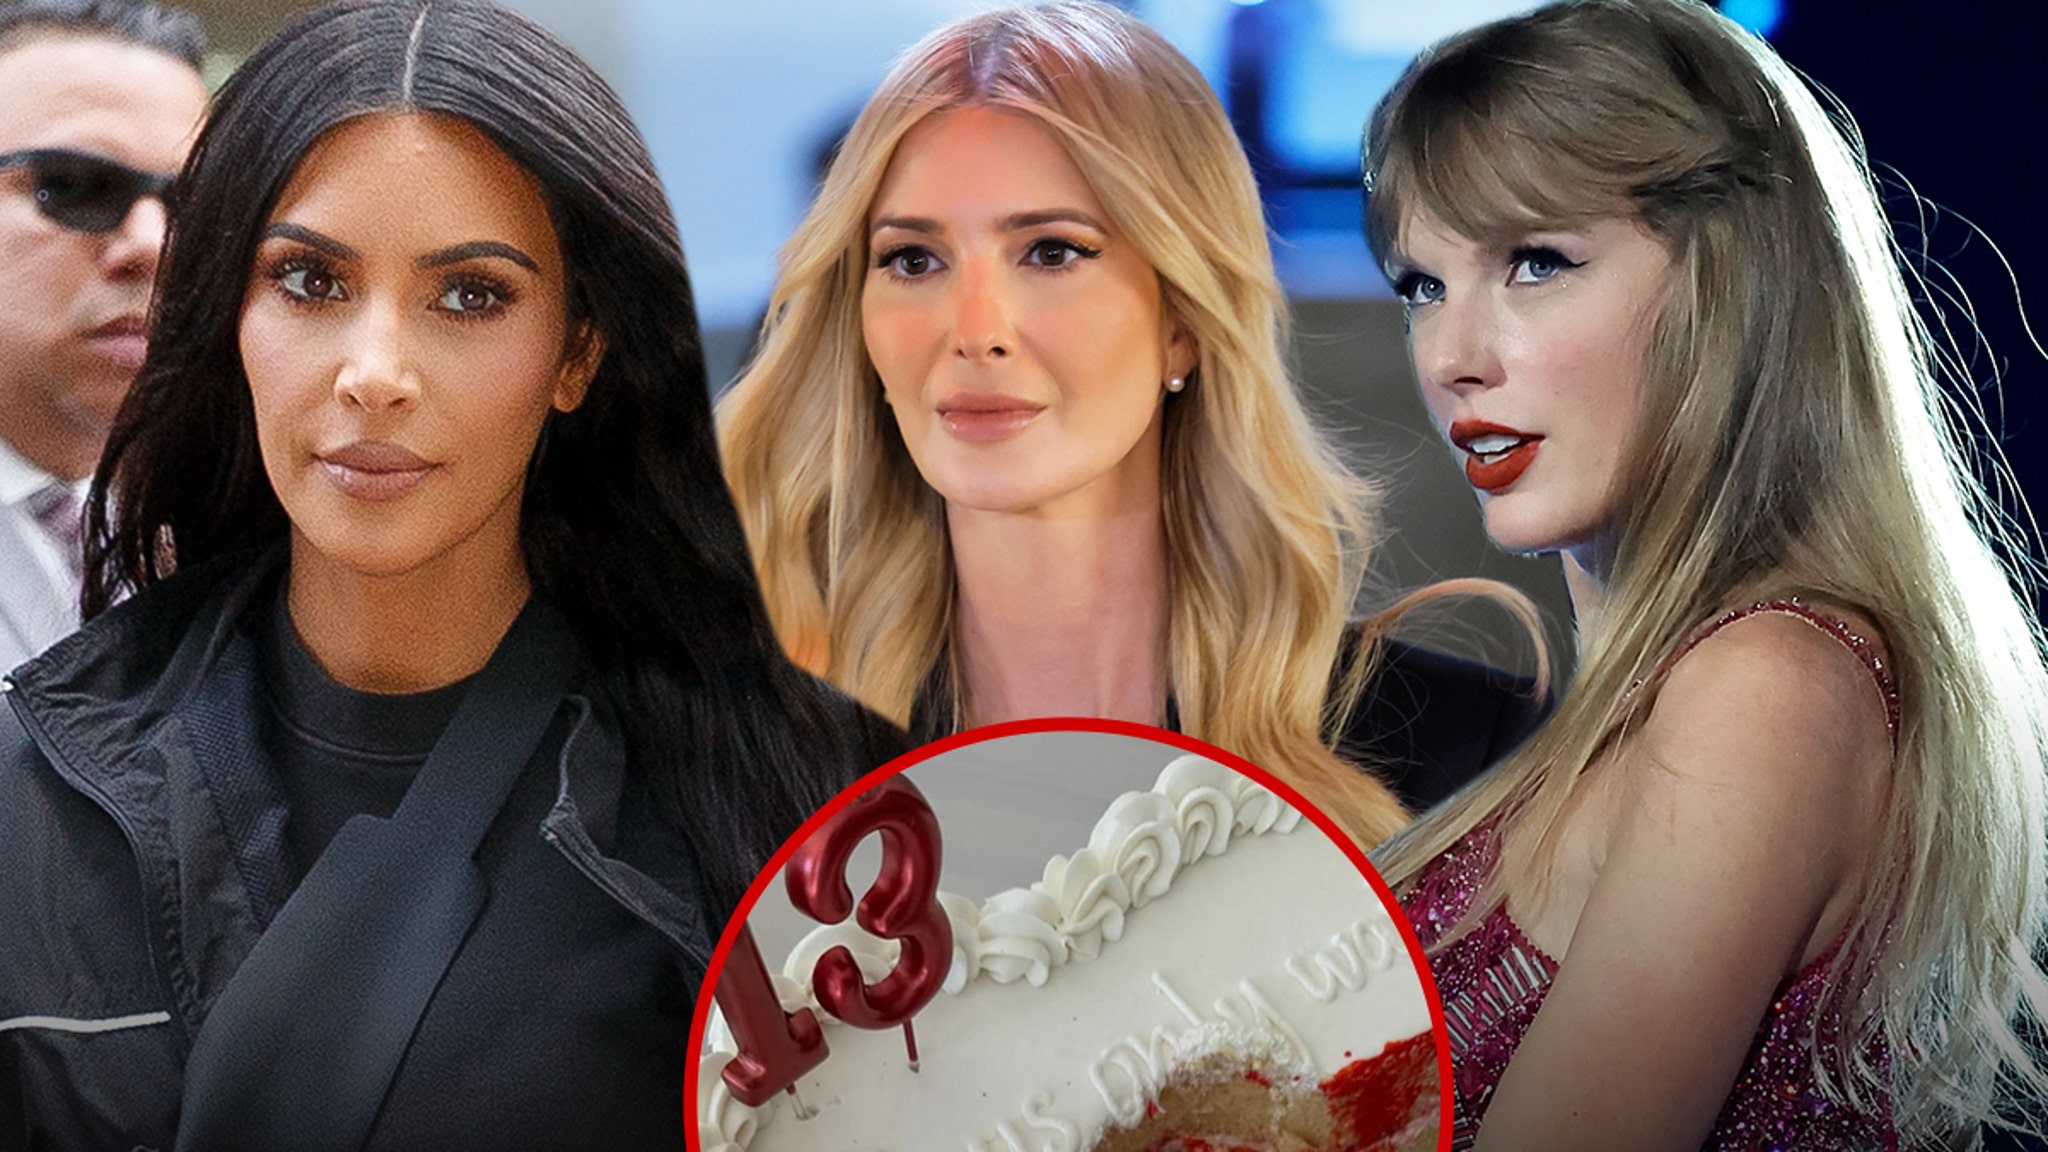 Kim Kardashian shows her love for Ivanka Trump’s Swiftie-inspired cake for her daughter